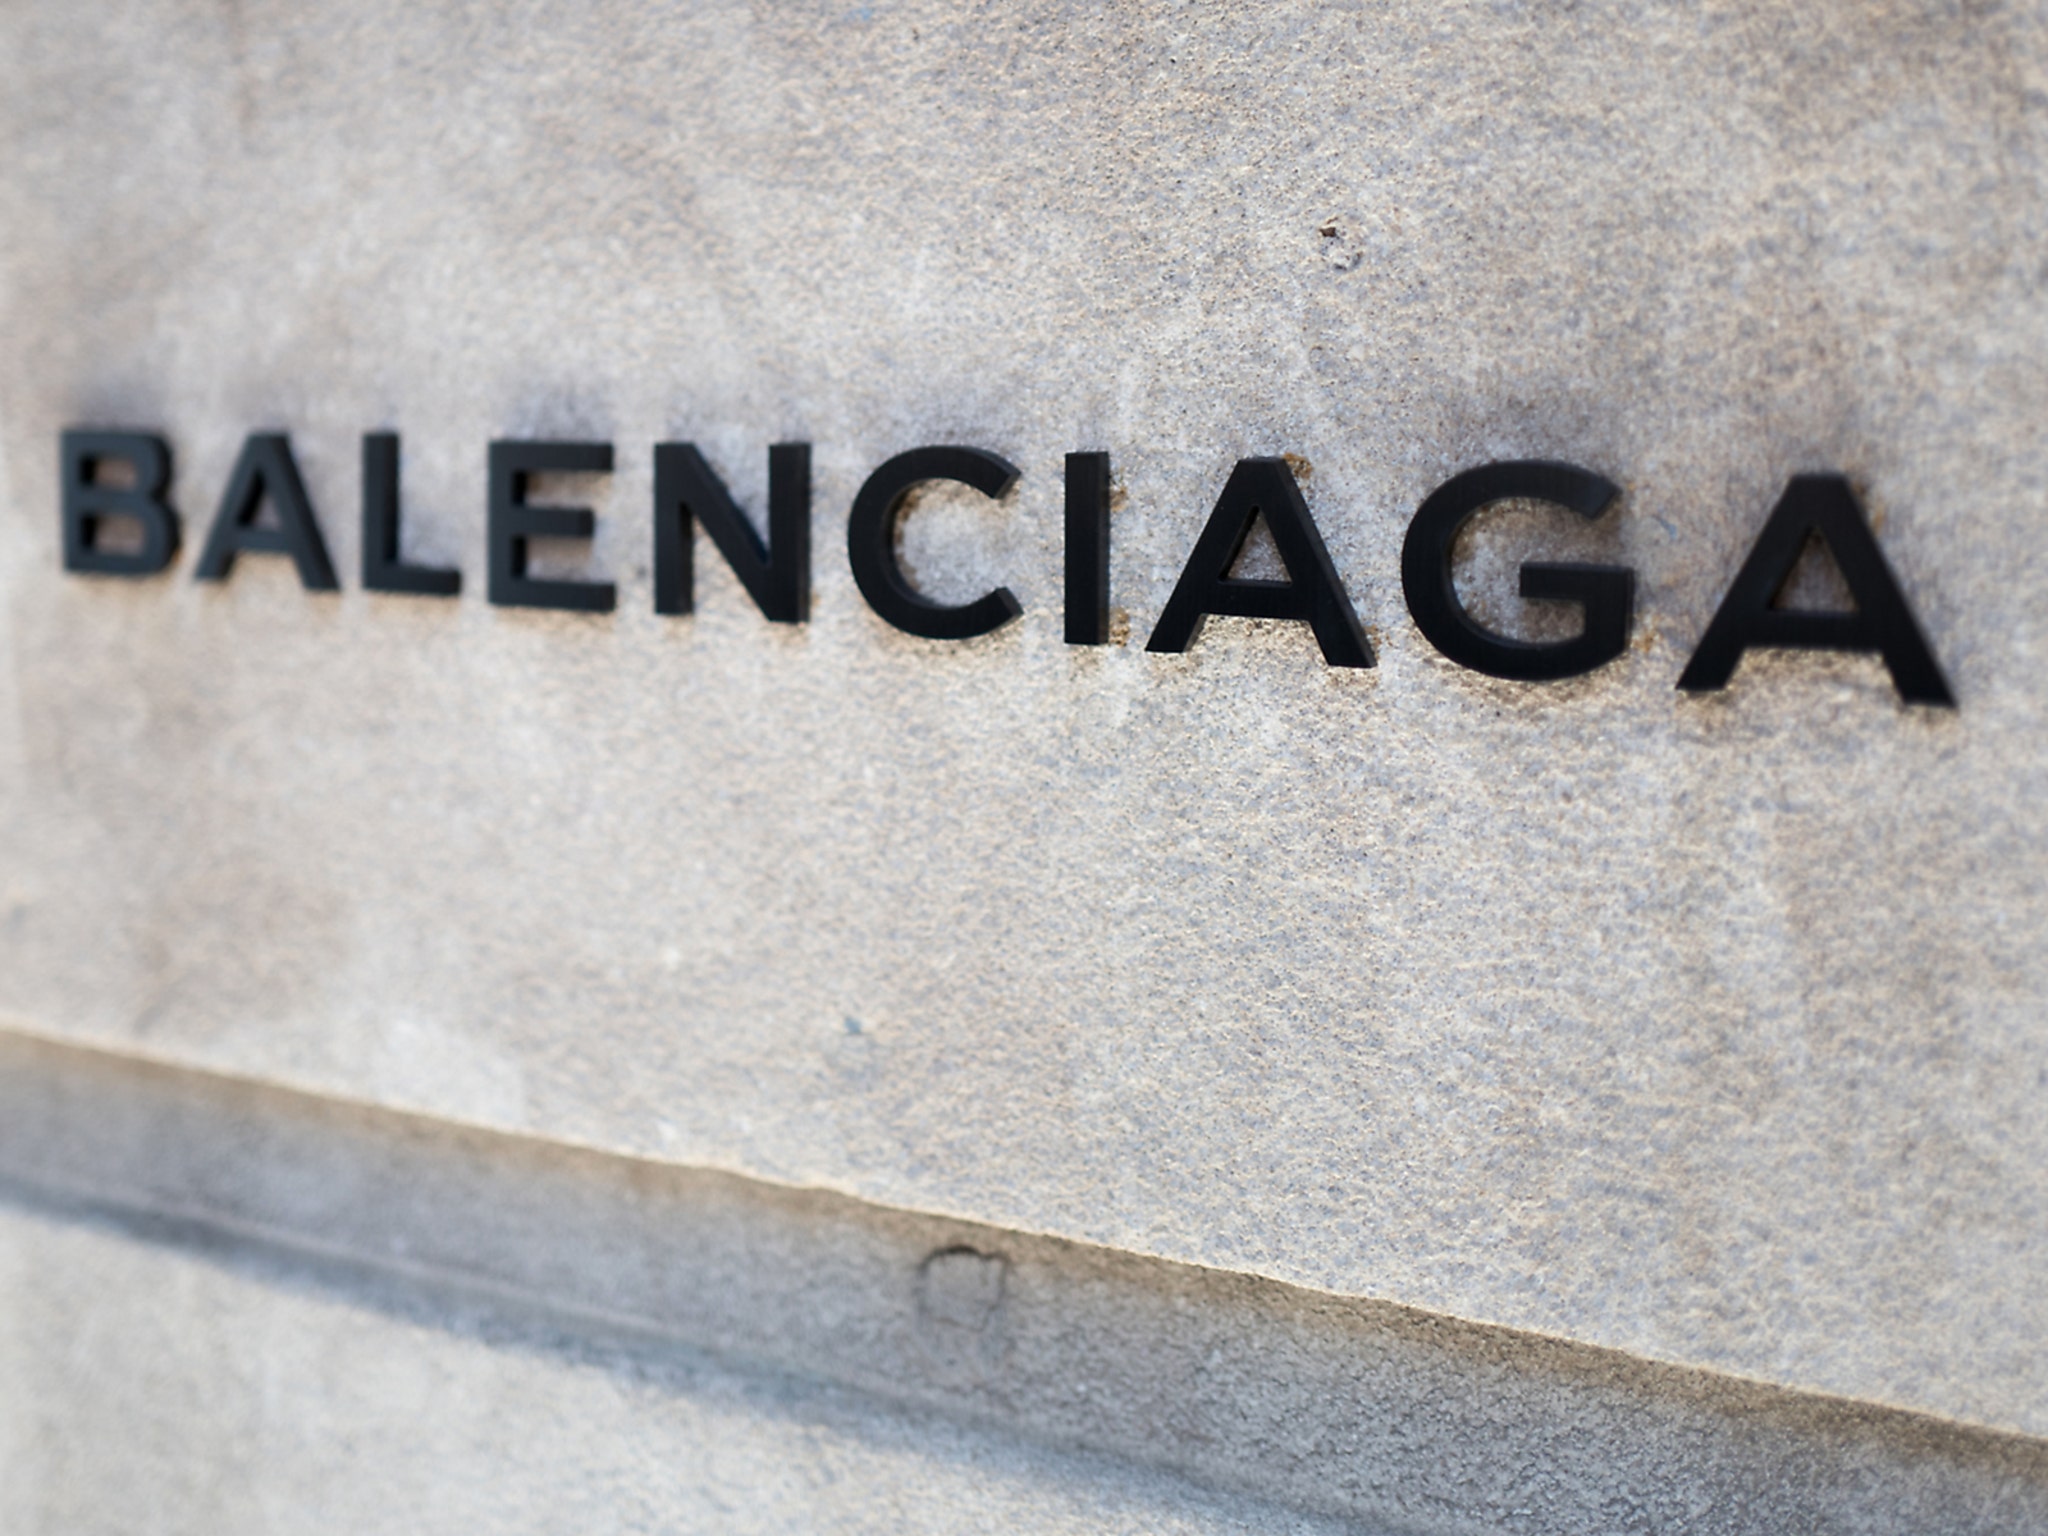 Balenciaga Apologizes for Ads Featuring Bondage Bears and Child